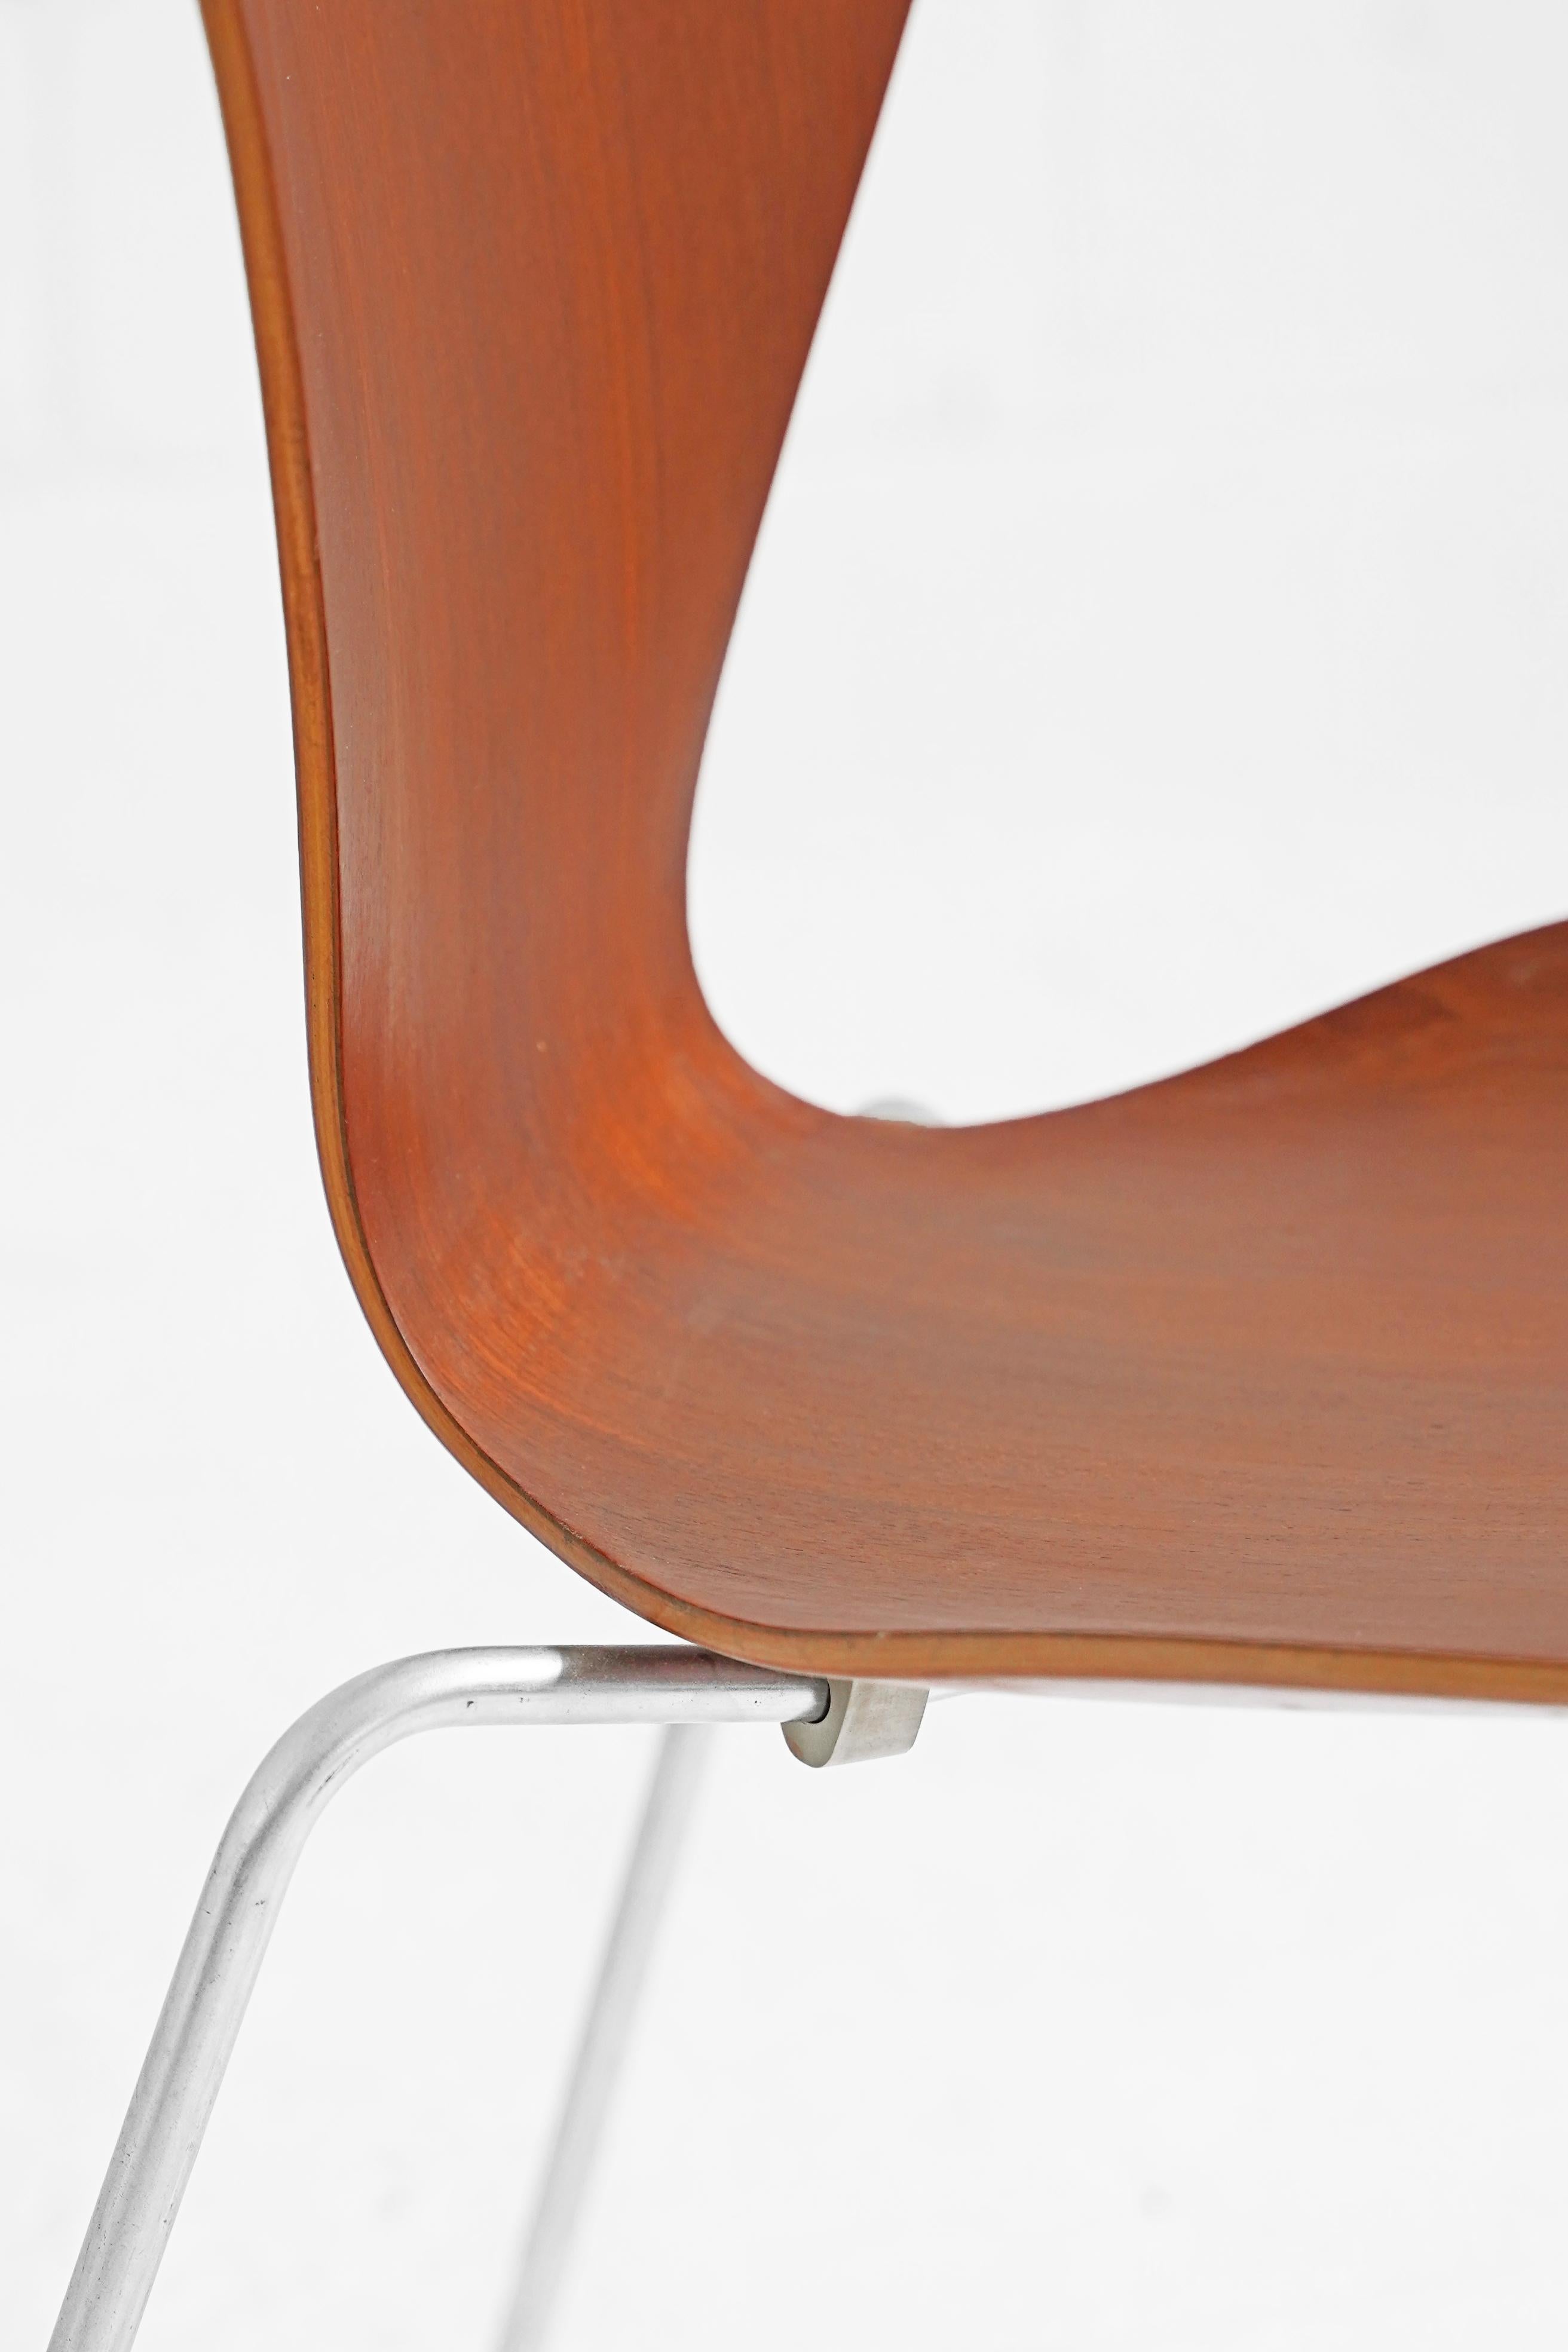 Set of 4 Series 7 Butterfly Chairs in Teak by Arne Jacobsen for Fritz Hansen 2